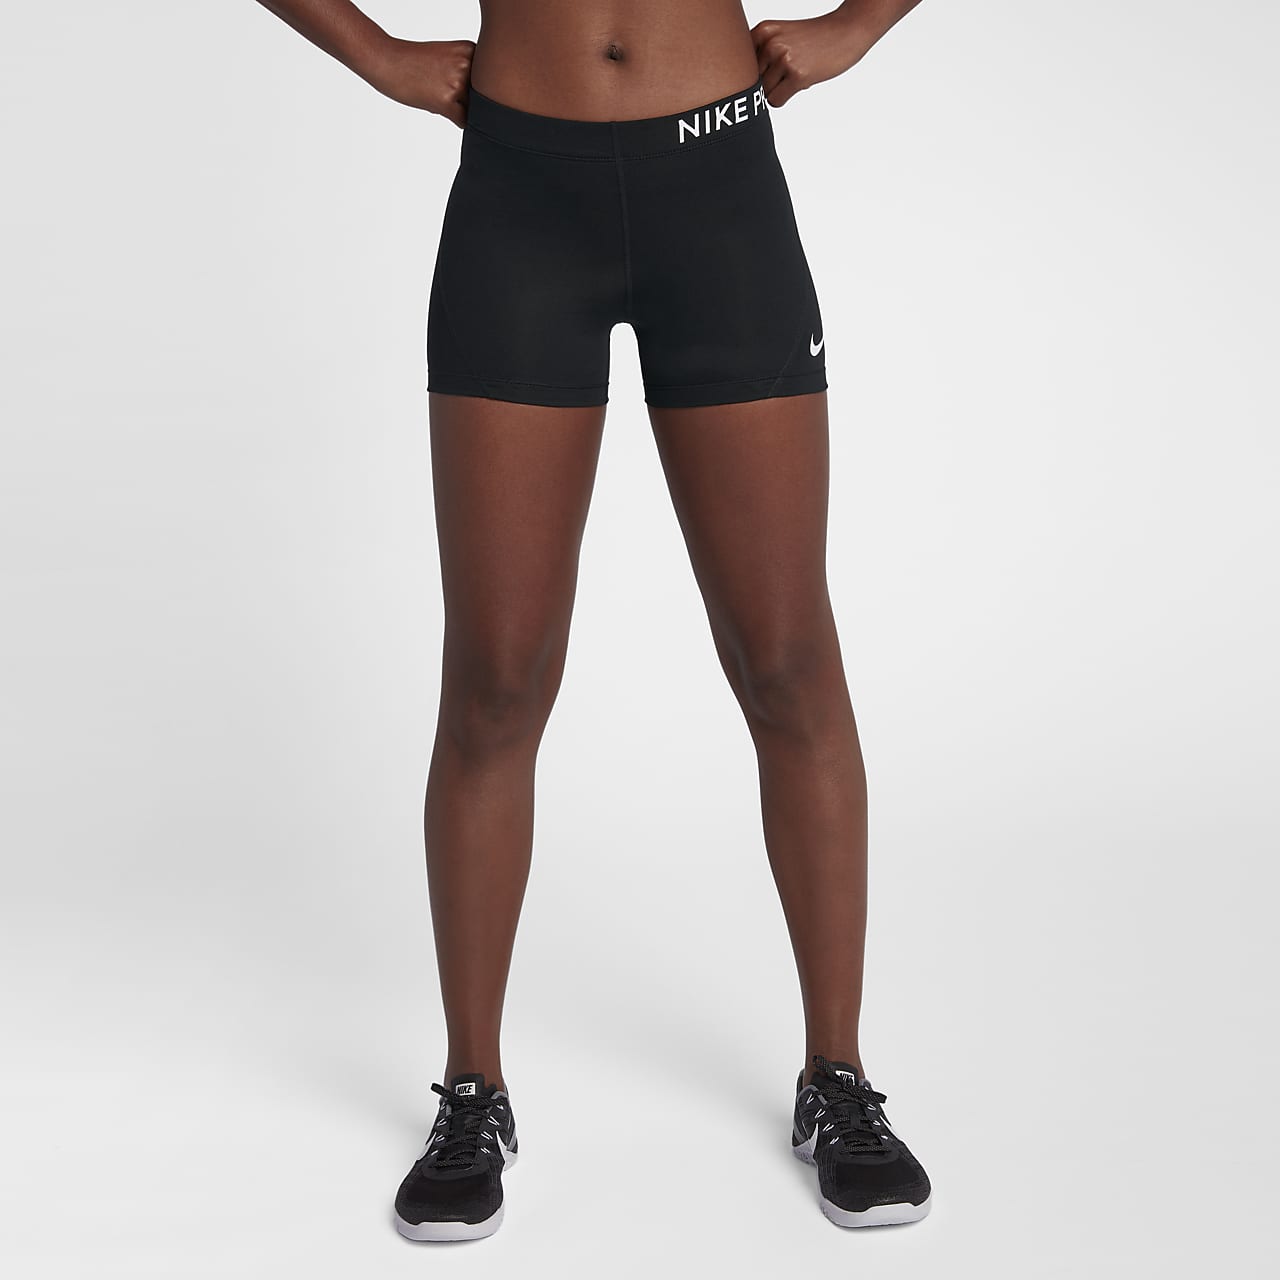 Шорты найк про. Nike Pro shorts. Nike Pro шорты Kenia. Nike 193658865784 шорты. Шорты Nike sp190710hit.